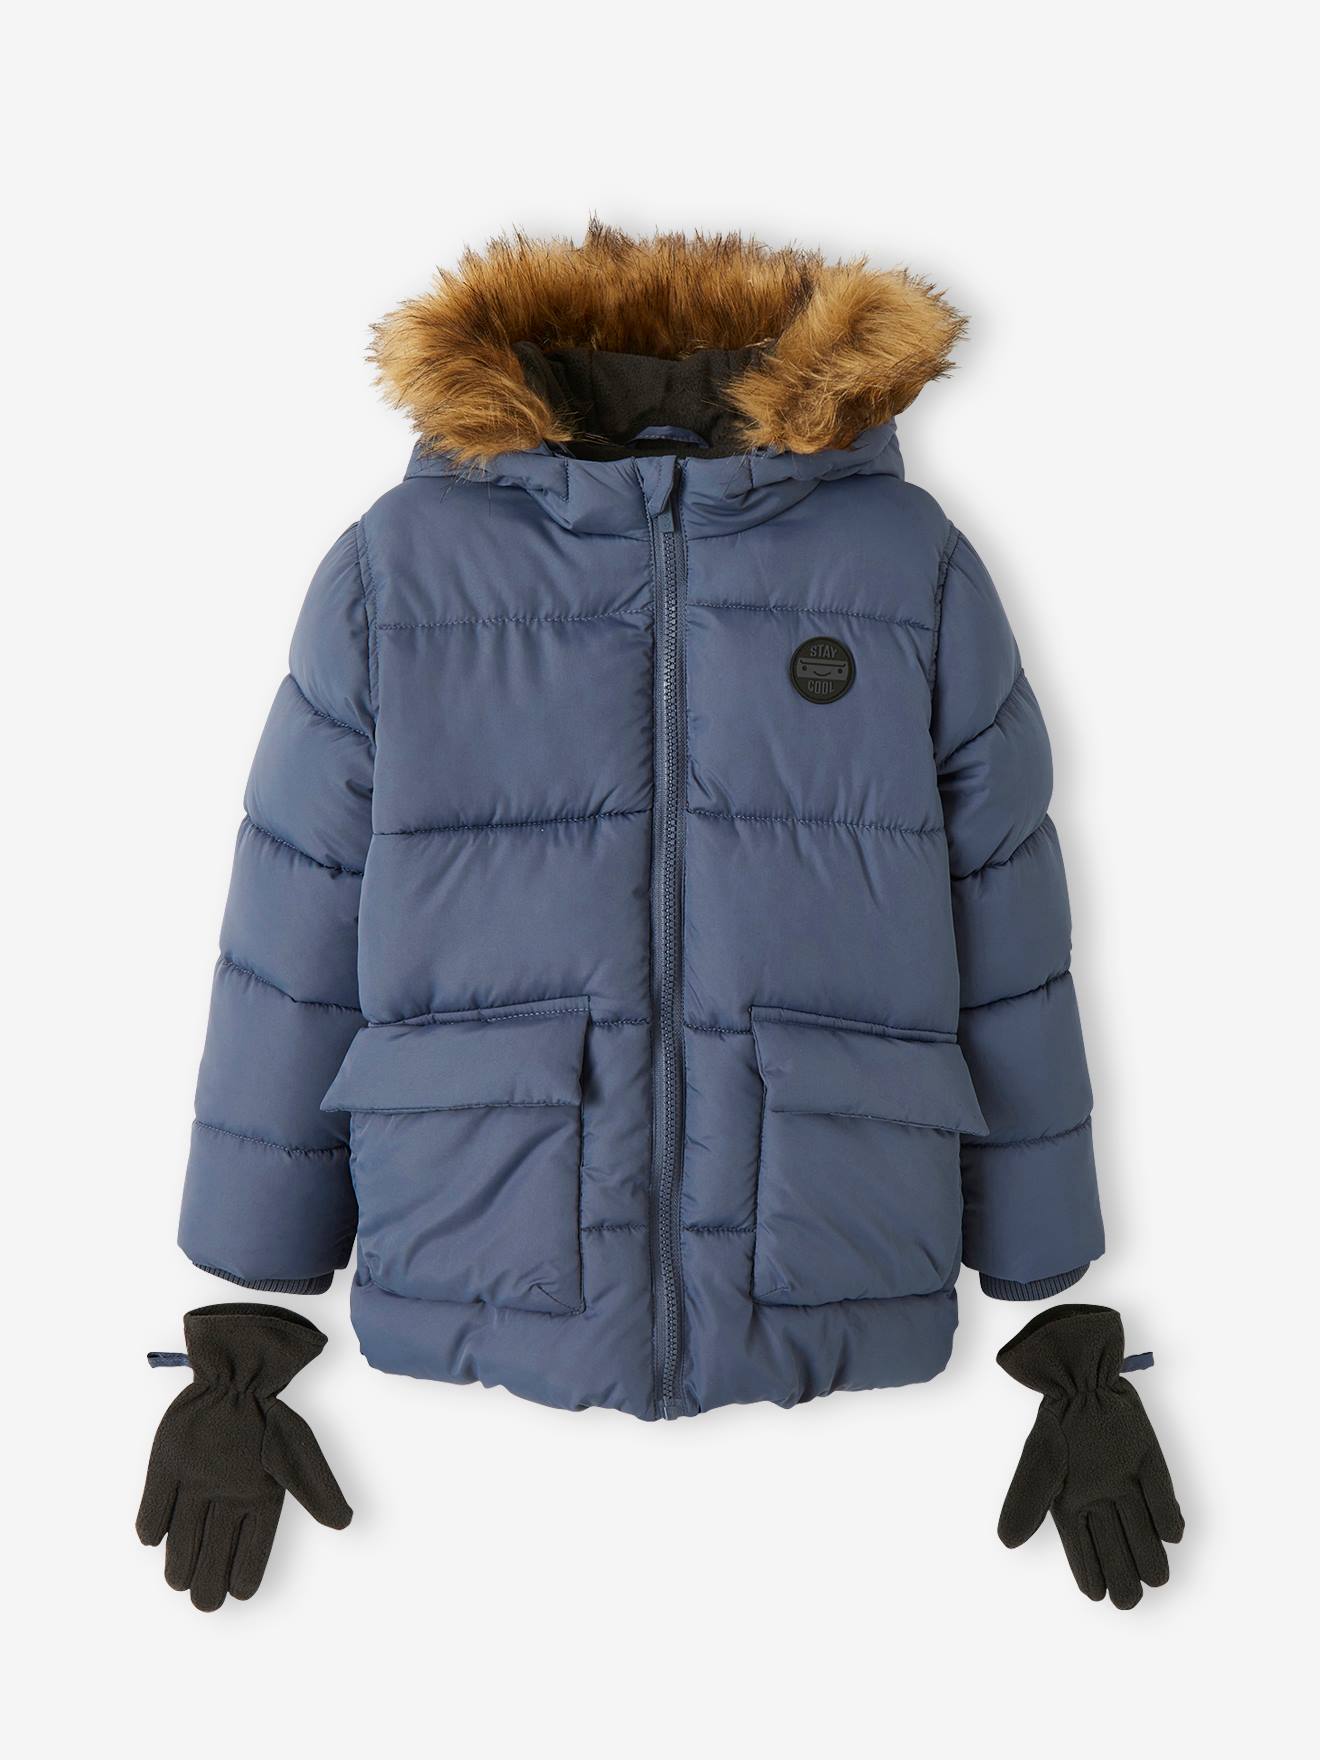 VERTBAUDET Chaqueta acolchada con forro polar y guantes o manoplas, para niño azul medio liso con motivos